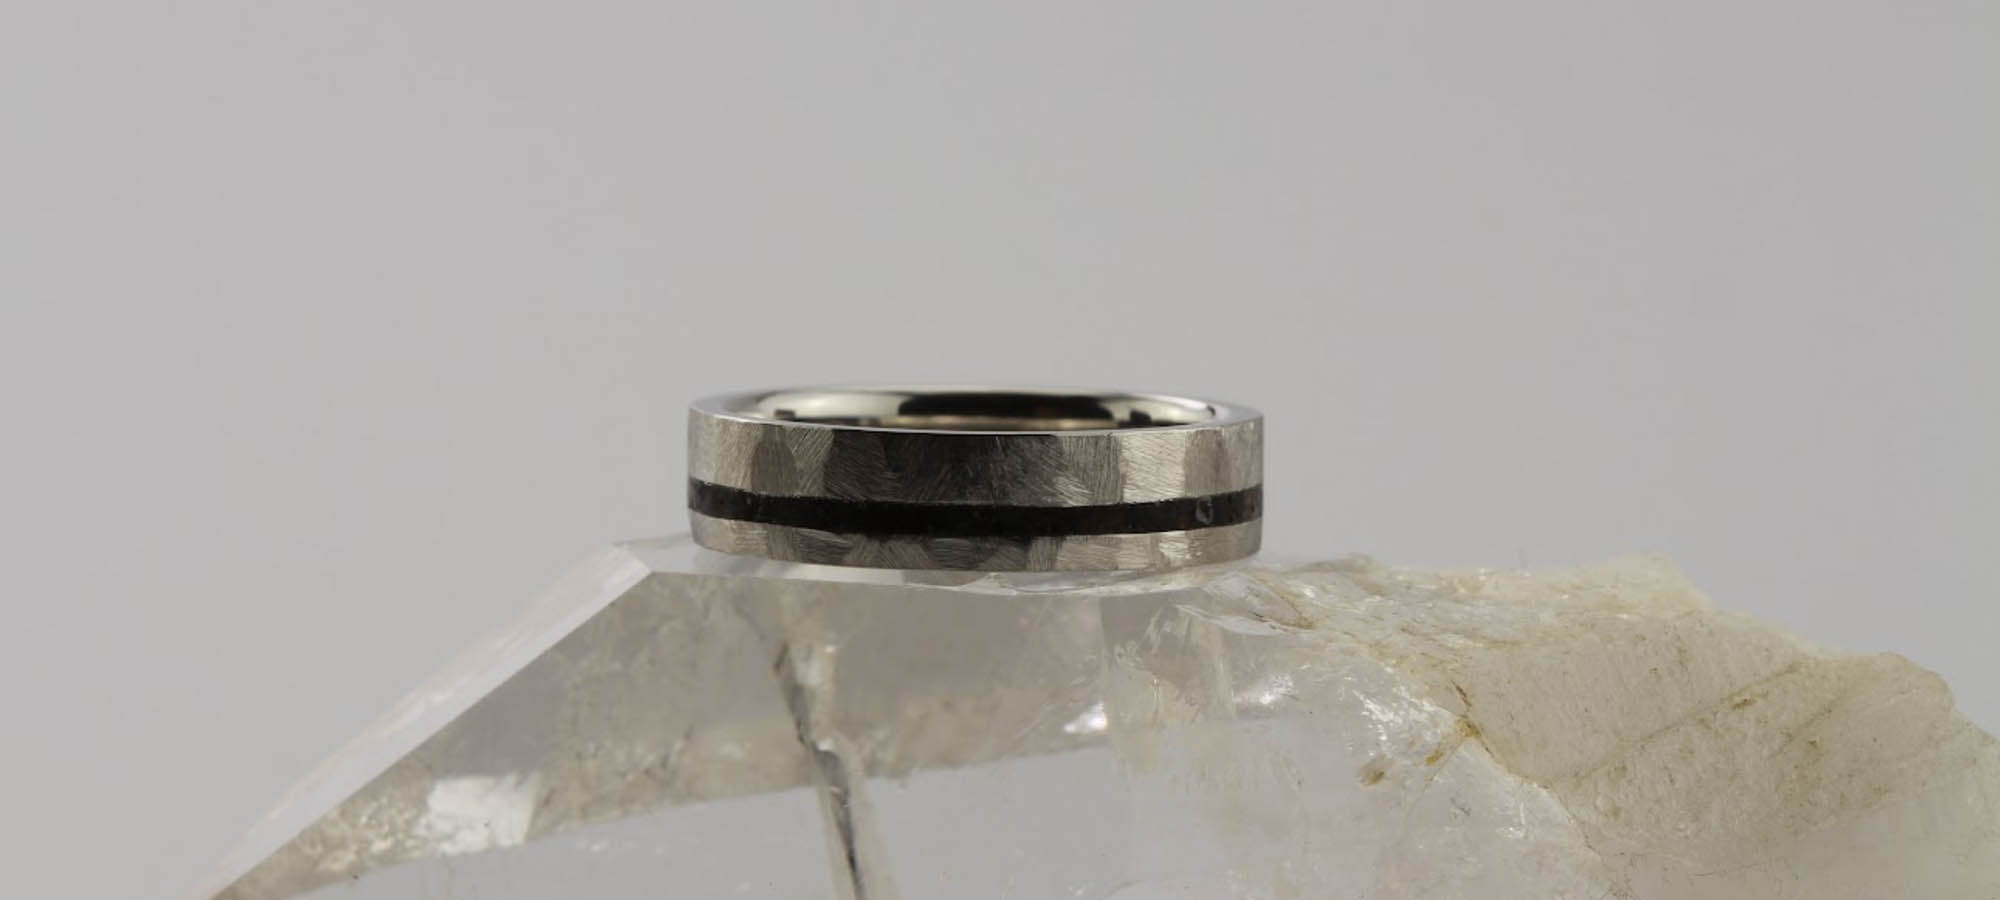 Recycled 950 Platinum Wedding Ring 